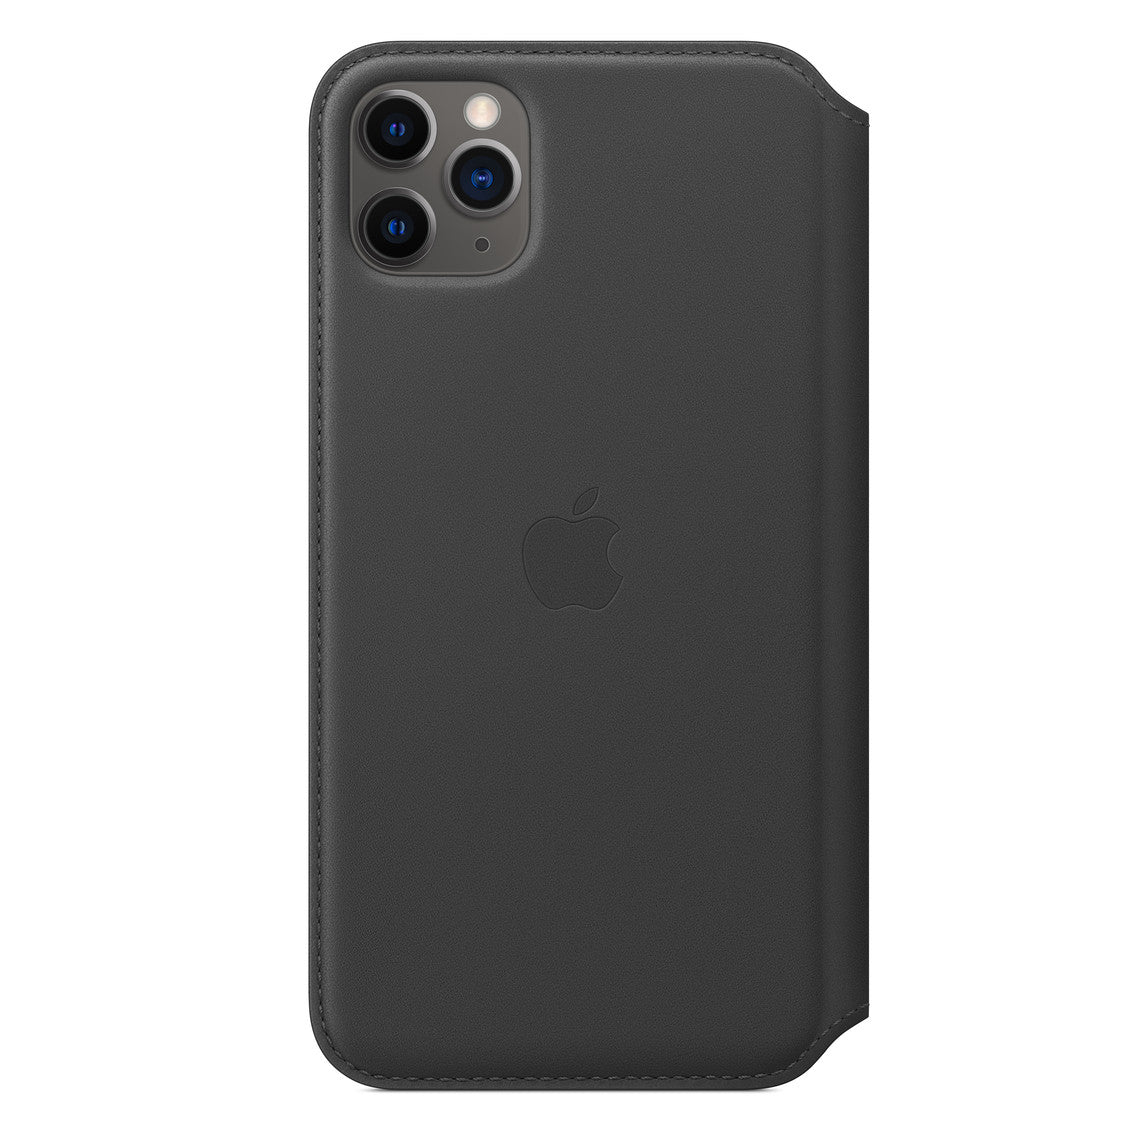 Apple iPhone 11 Pro Max 64GB Space Grau Fair Ohne Vertrag mit Apple iPhone 11 Pro Max Leder Folio - Schwarz